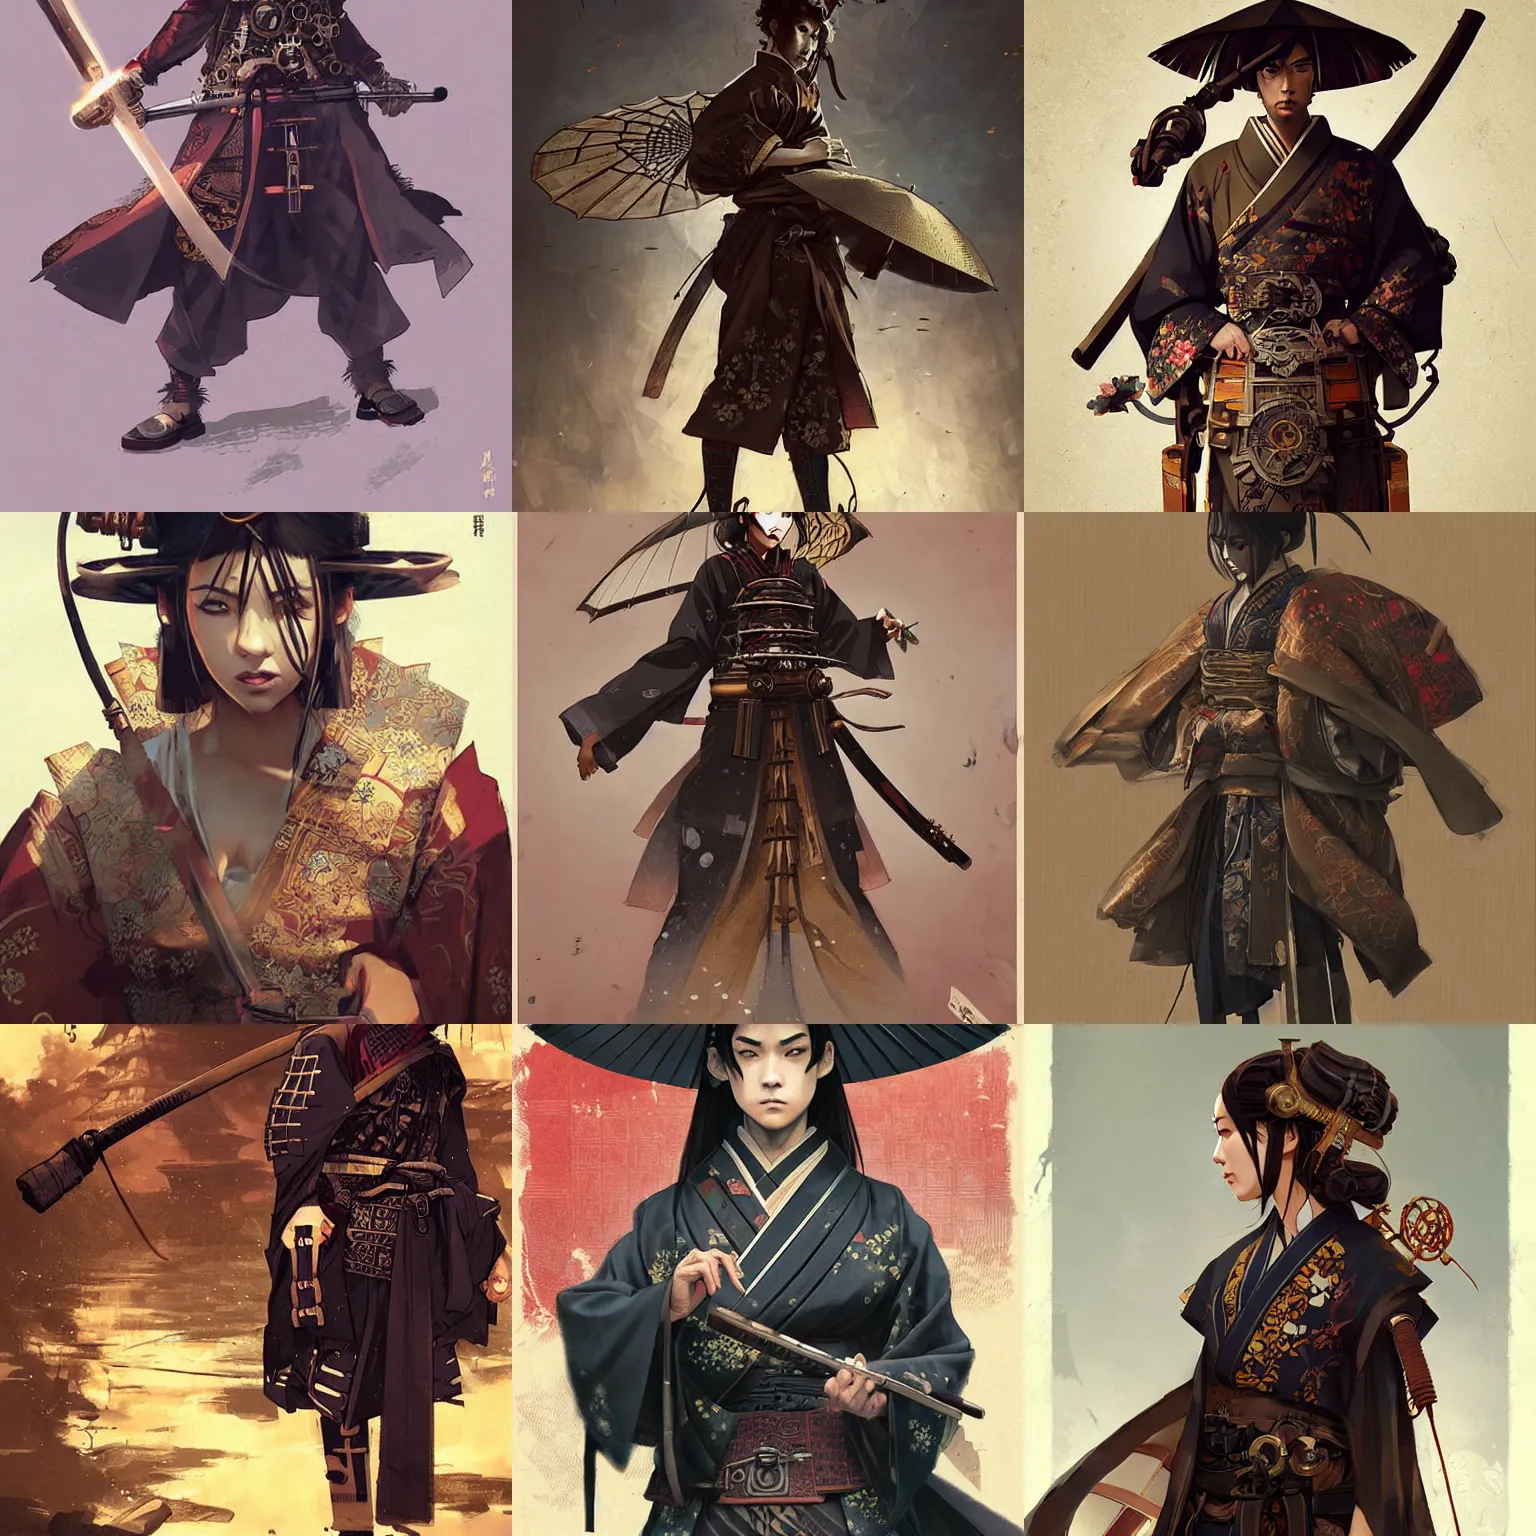 Prompt: steampunk samurai wearing yukata, by greg rutkowski, artgerm, rule of thirds, fierce look, beautiful